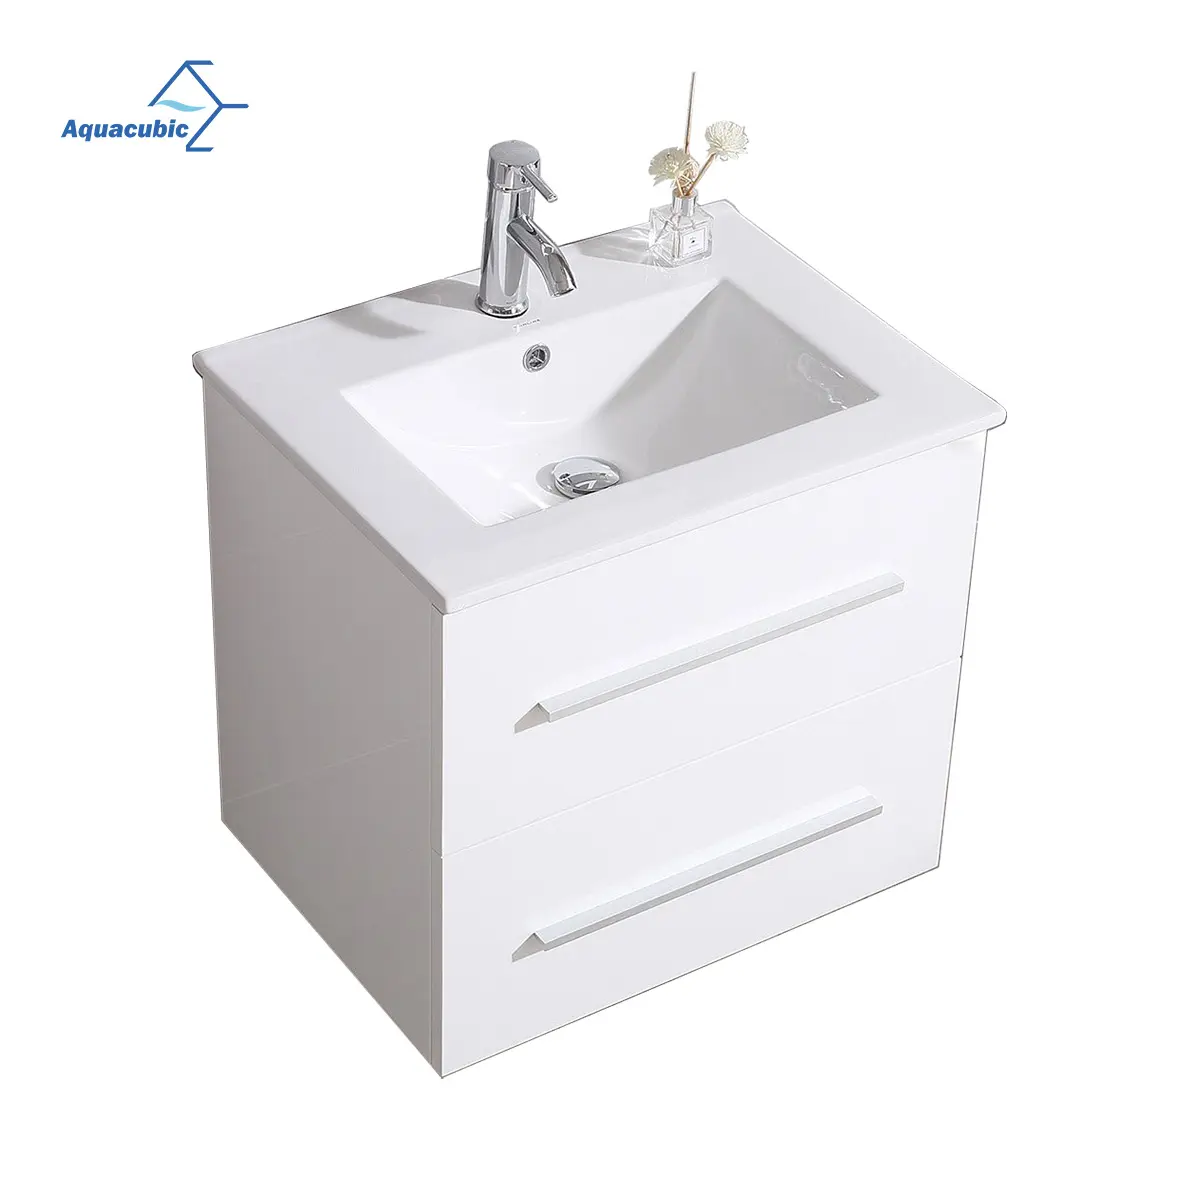 Lüks modern duvara monte lavabo üretilen ahşap bâtıla banyo mutfak dolabı seti dolabı seramik lavabo ayna makyaj